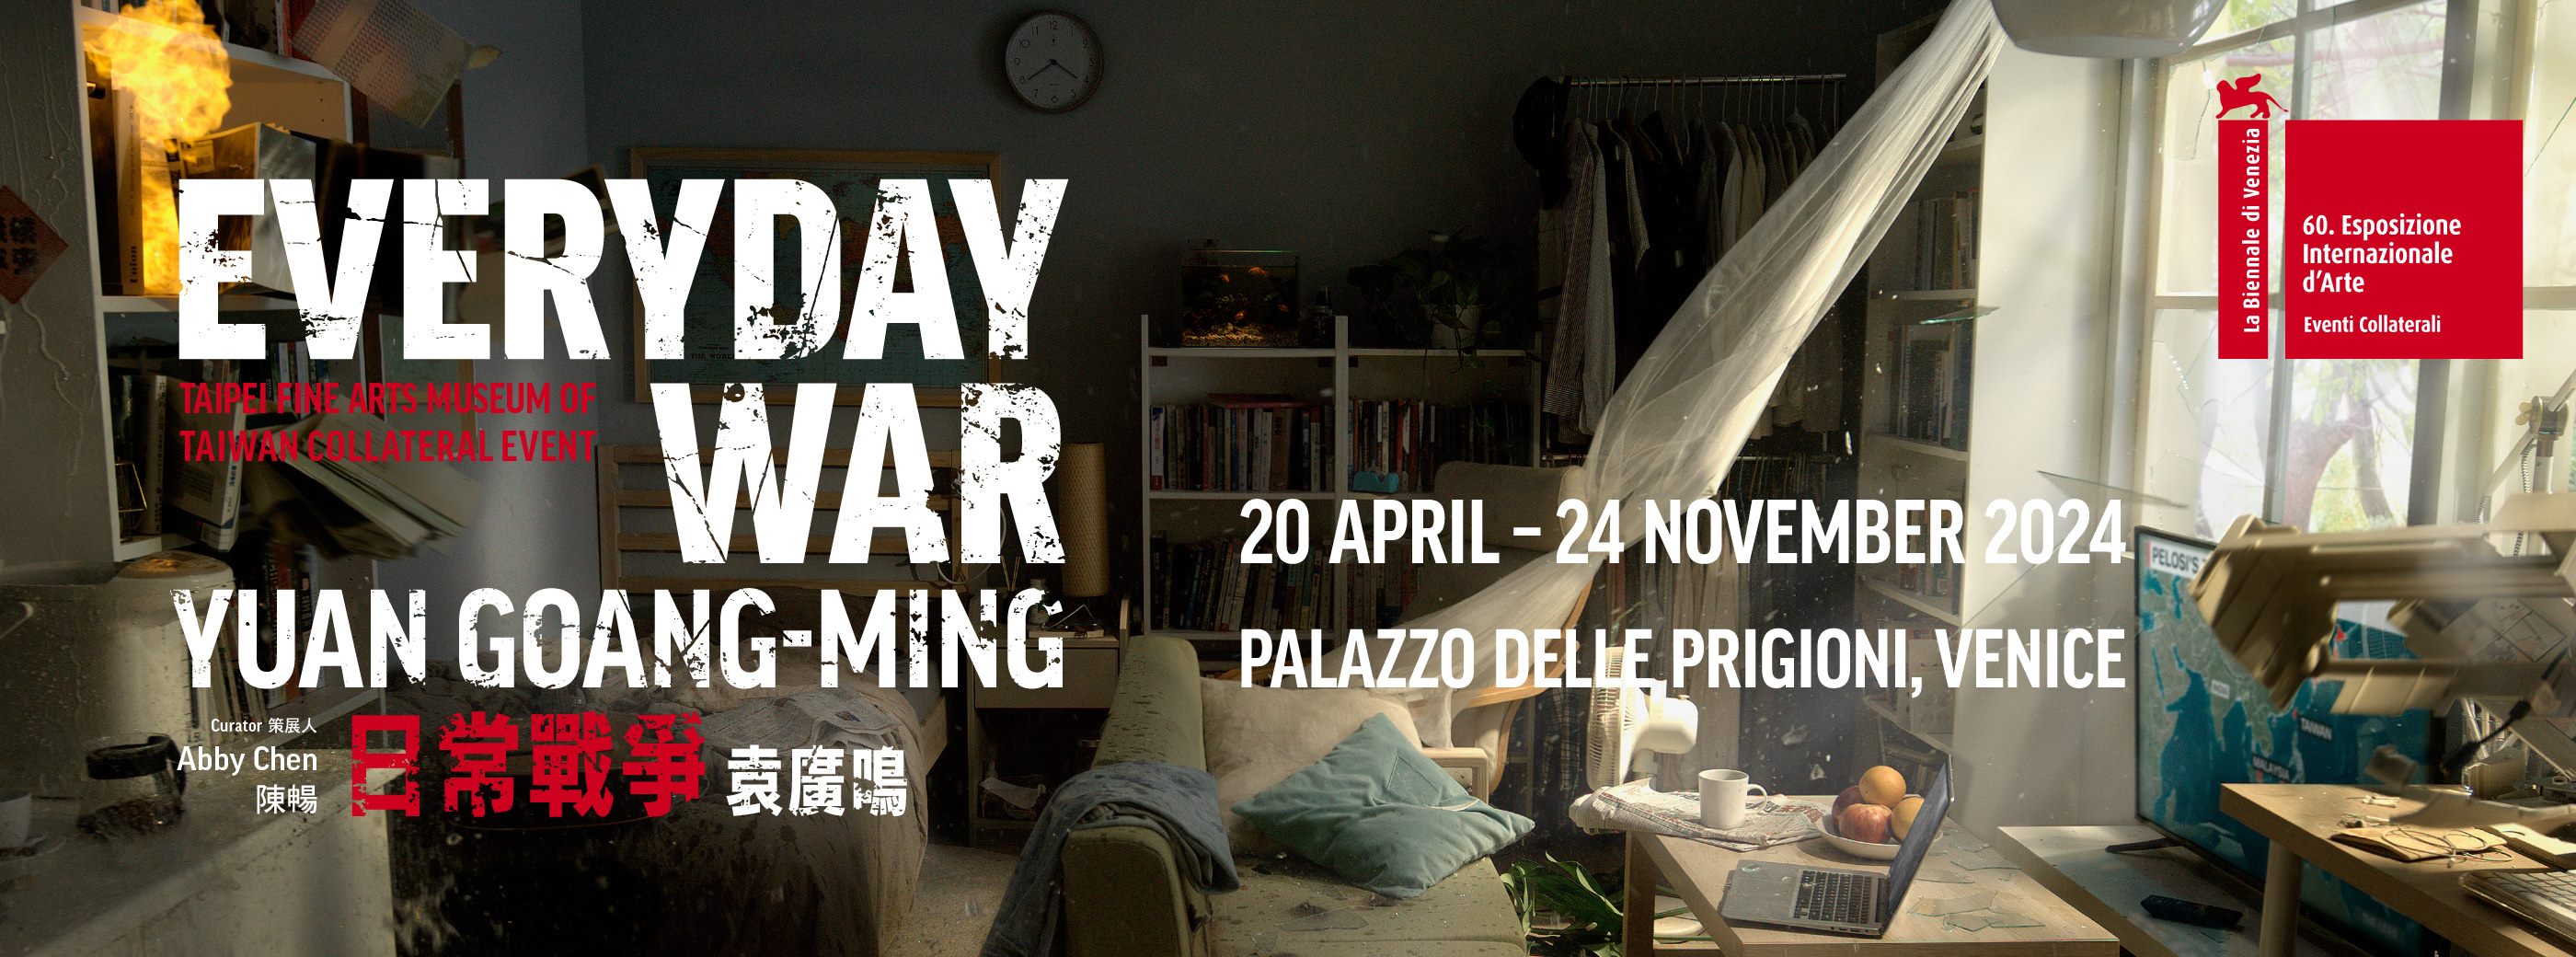 Yuan Goang-Ming: Everyday War Collateral Event of the 60th International Art Exhibition, La Biennale di Venezia